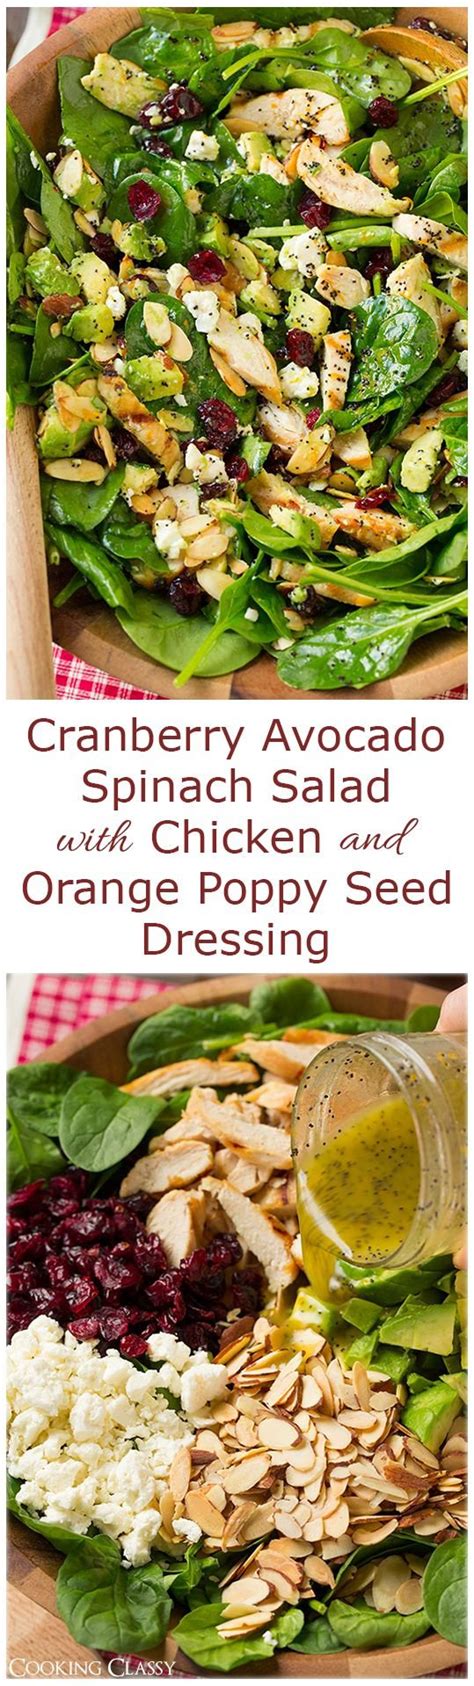 Cranberry Avocado Spinach Salad 17 Simple Salad Inspos To Help